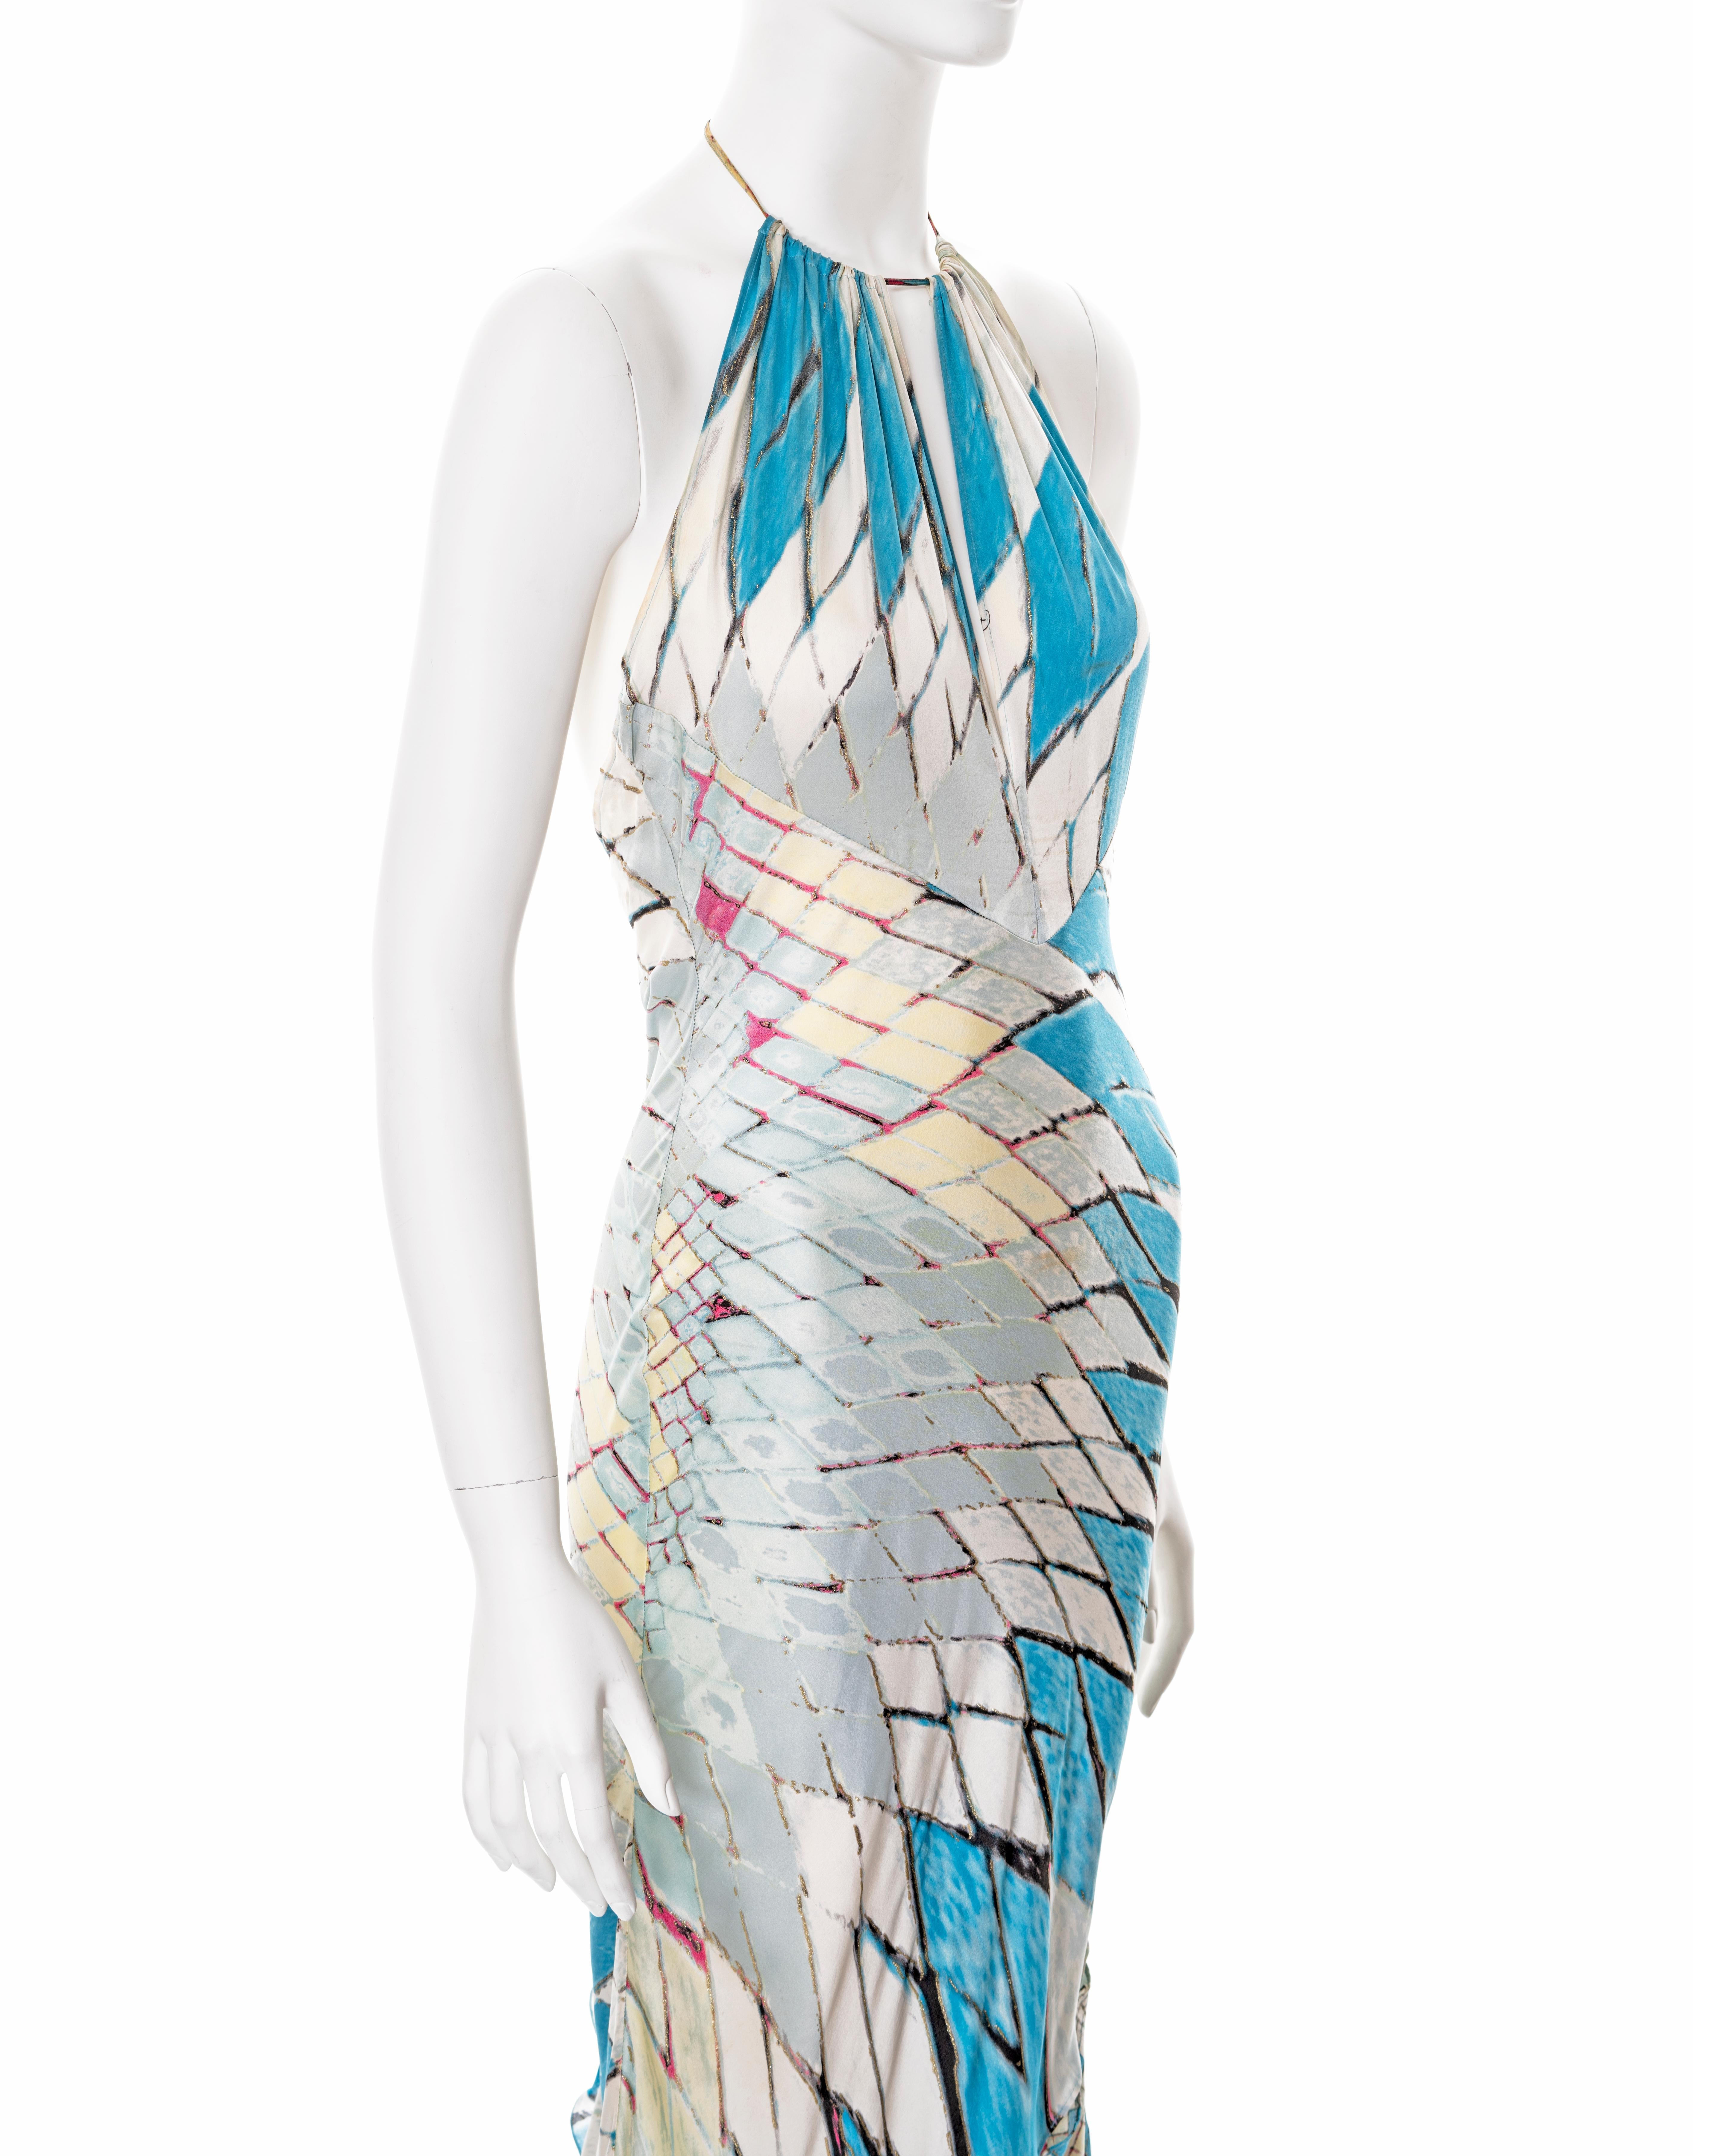 Roberto Cavalli printed bias-cut silk trained evening dress, ss 2004 For Sale 2